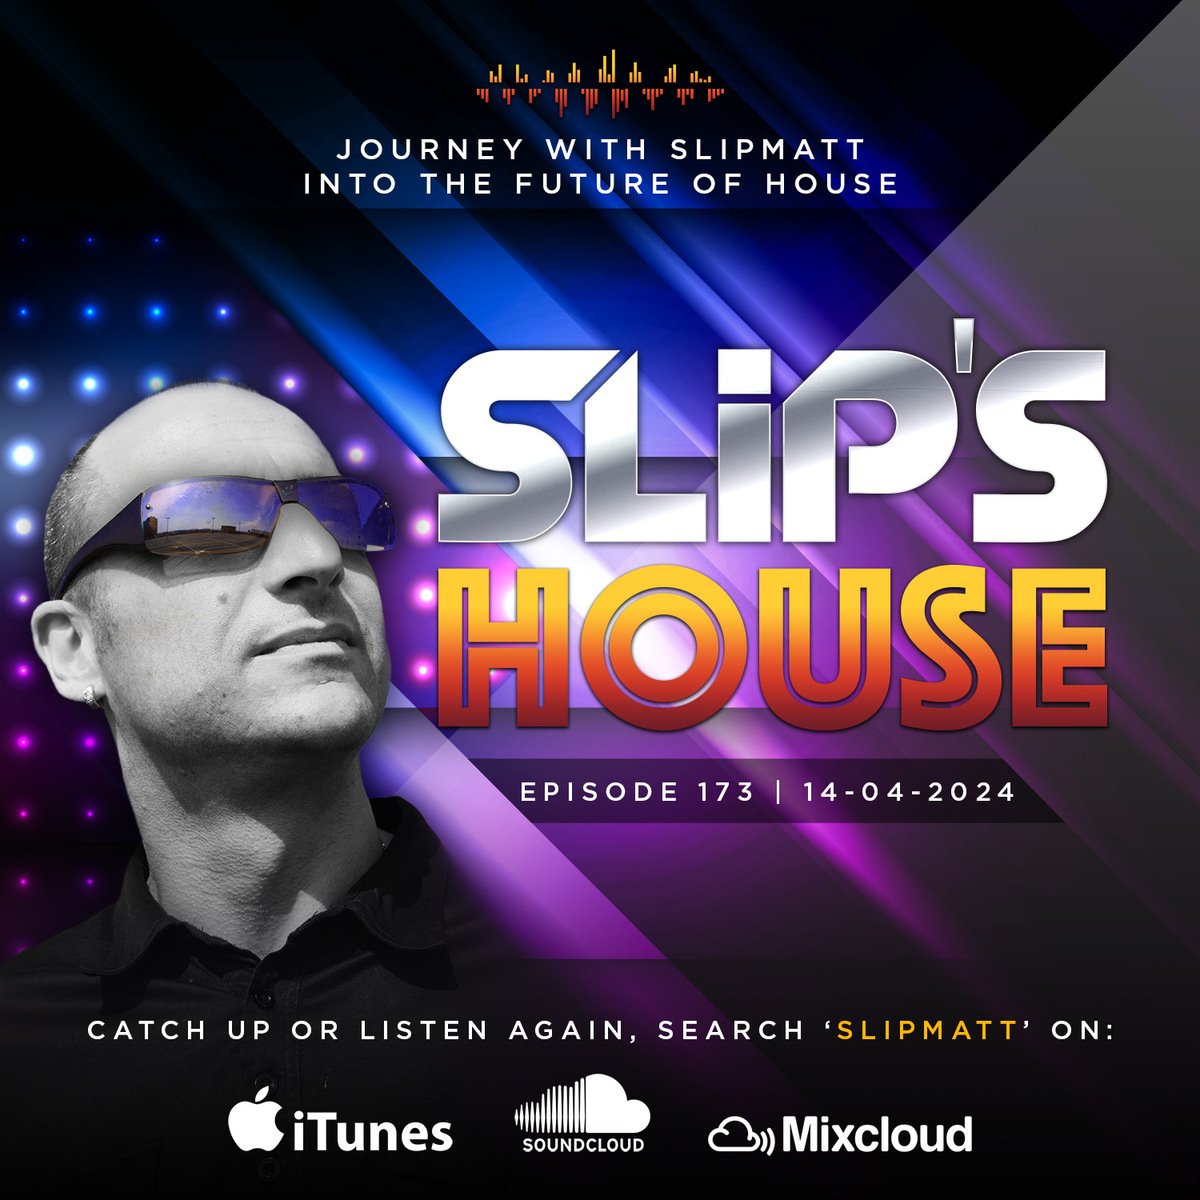 This week's show in case you missed it!
mixcloud.com/Slipmatt/slipm…

#rave #slipmatt #slipshouse #ravehouse #slipbackintime #slipstore